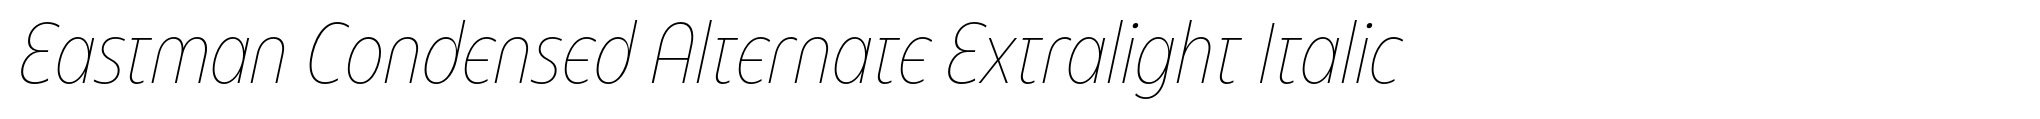 Eastman Condensed Alternate Extralight Italic image